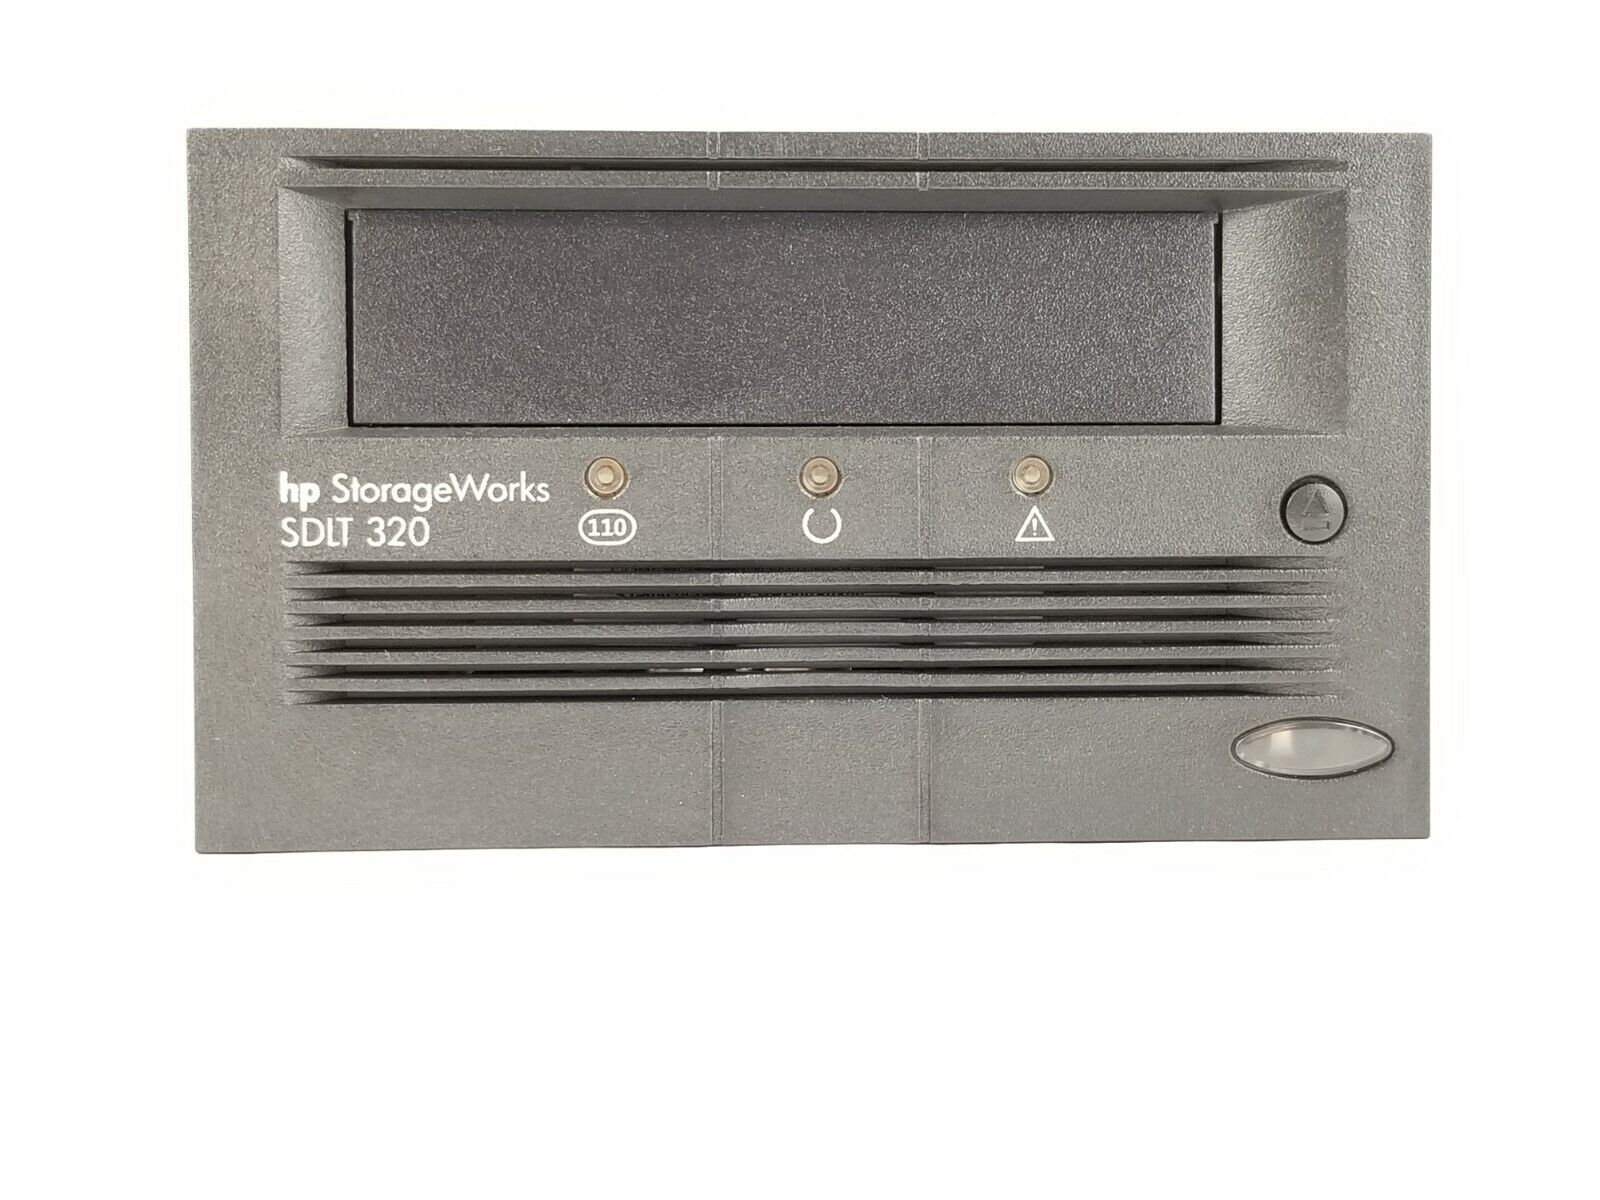 HP Storage Works SDLT 320 S1-80014-01